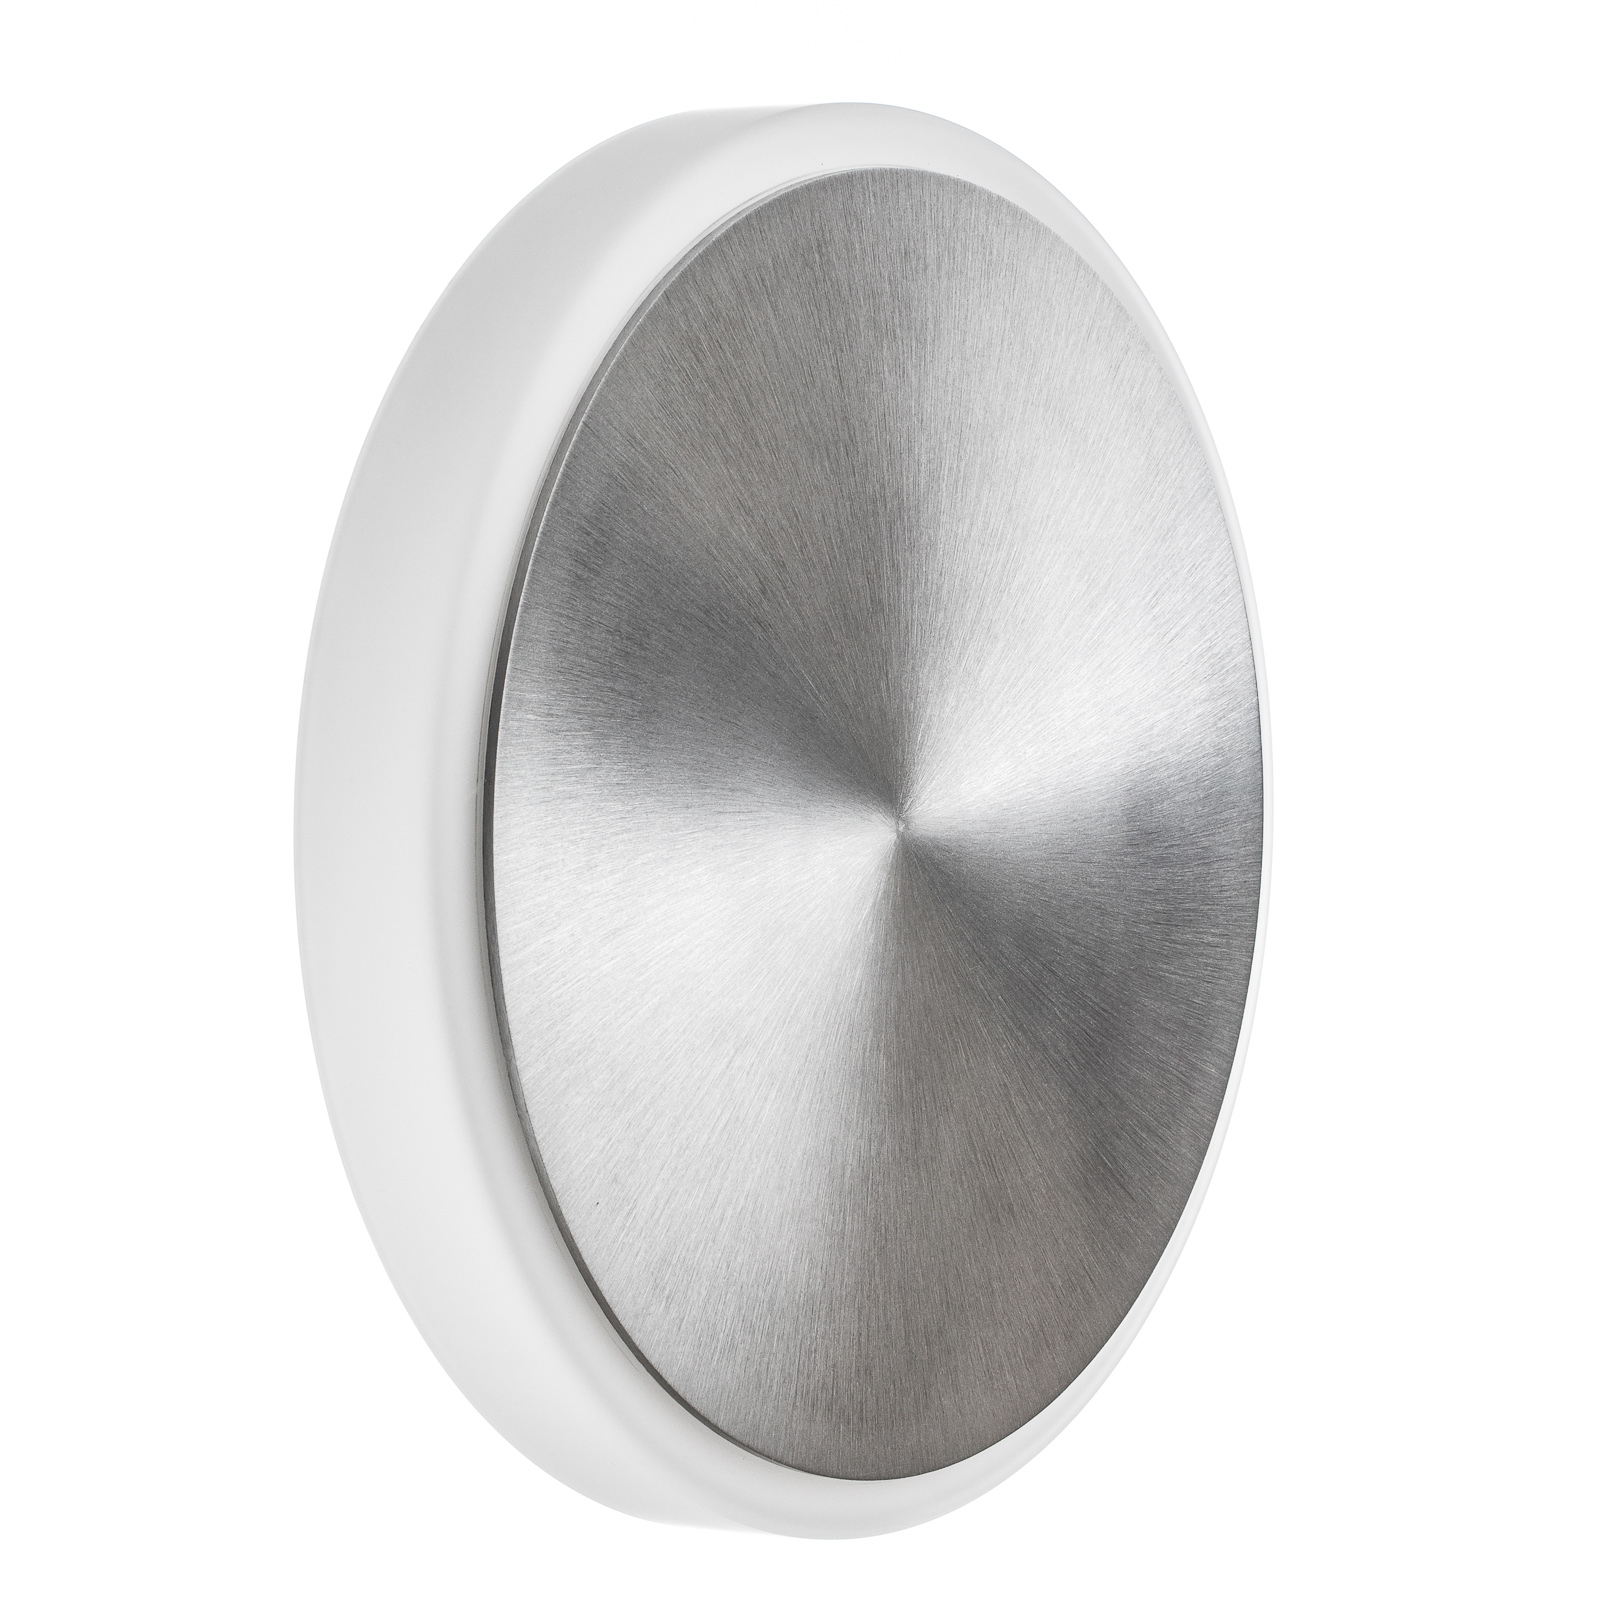 BANKAMP Button LED-vägglampa, 33 cm, aluminium